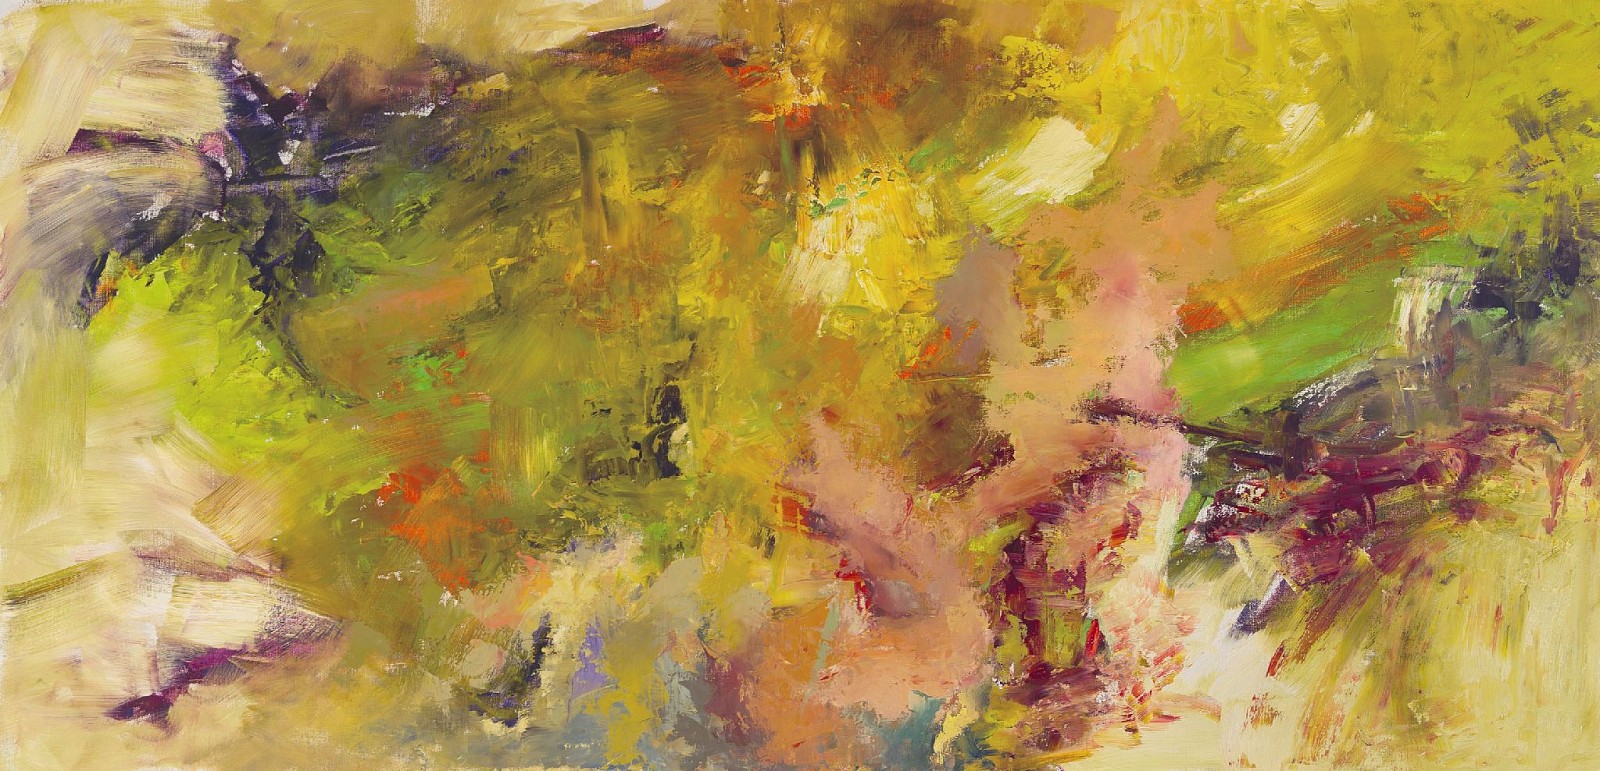 Beverly Barkat, #460
Oil on Canvas, 47 1/8 x 90 1/2 in.
BARK00013